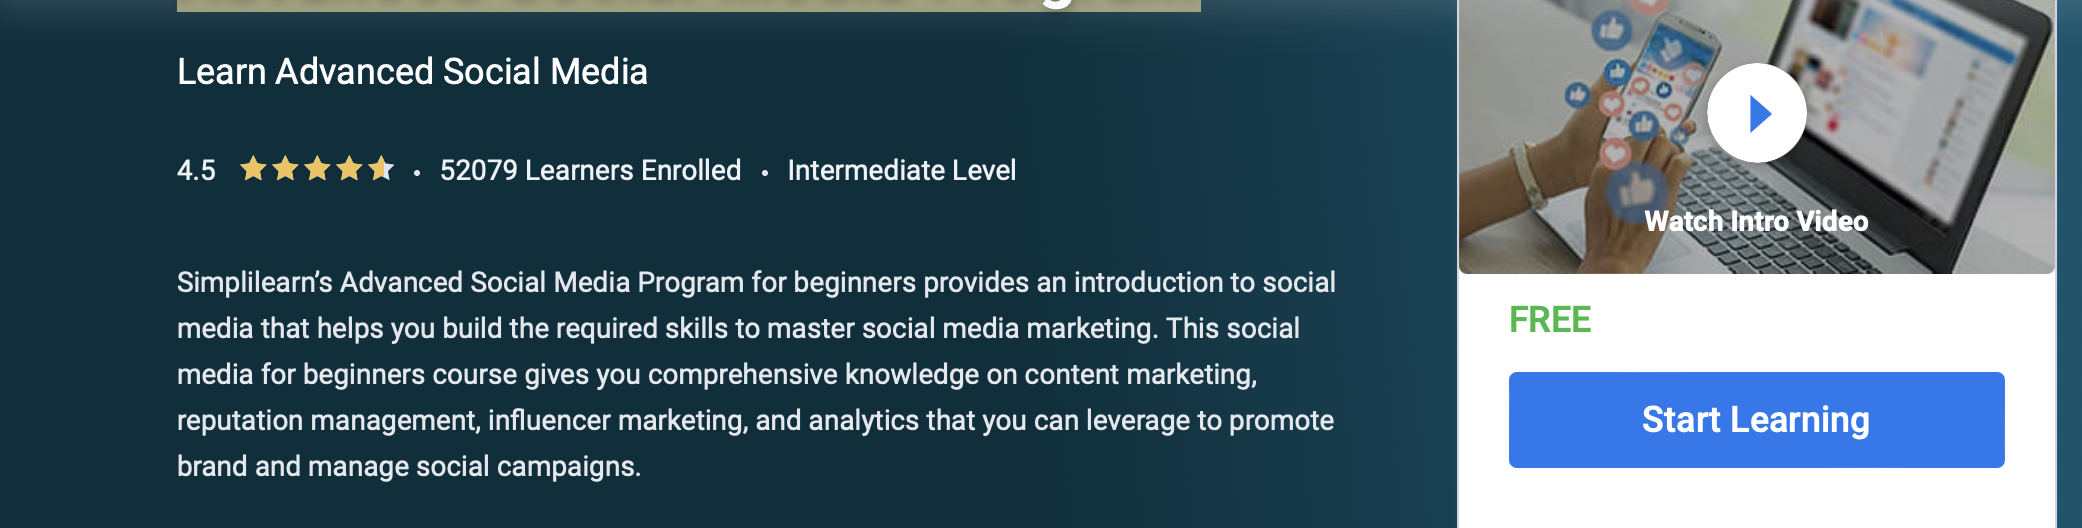 Advanced Social Media Program